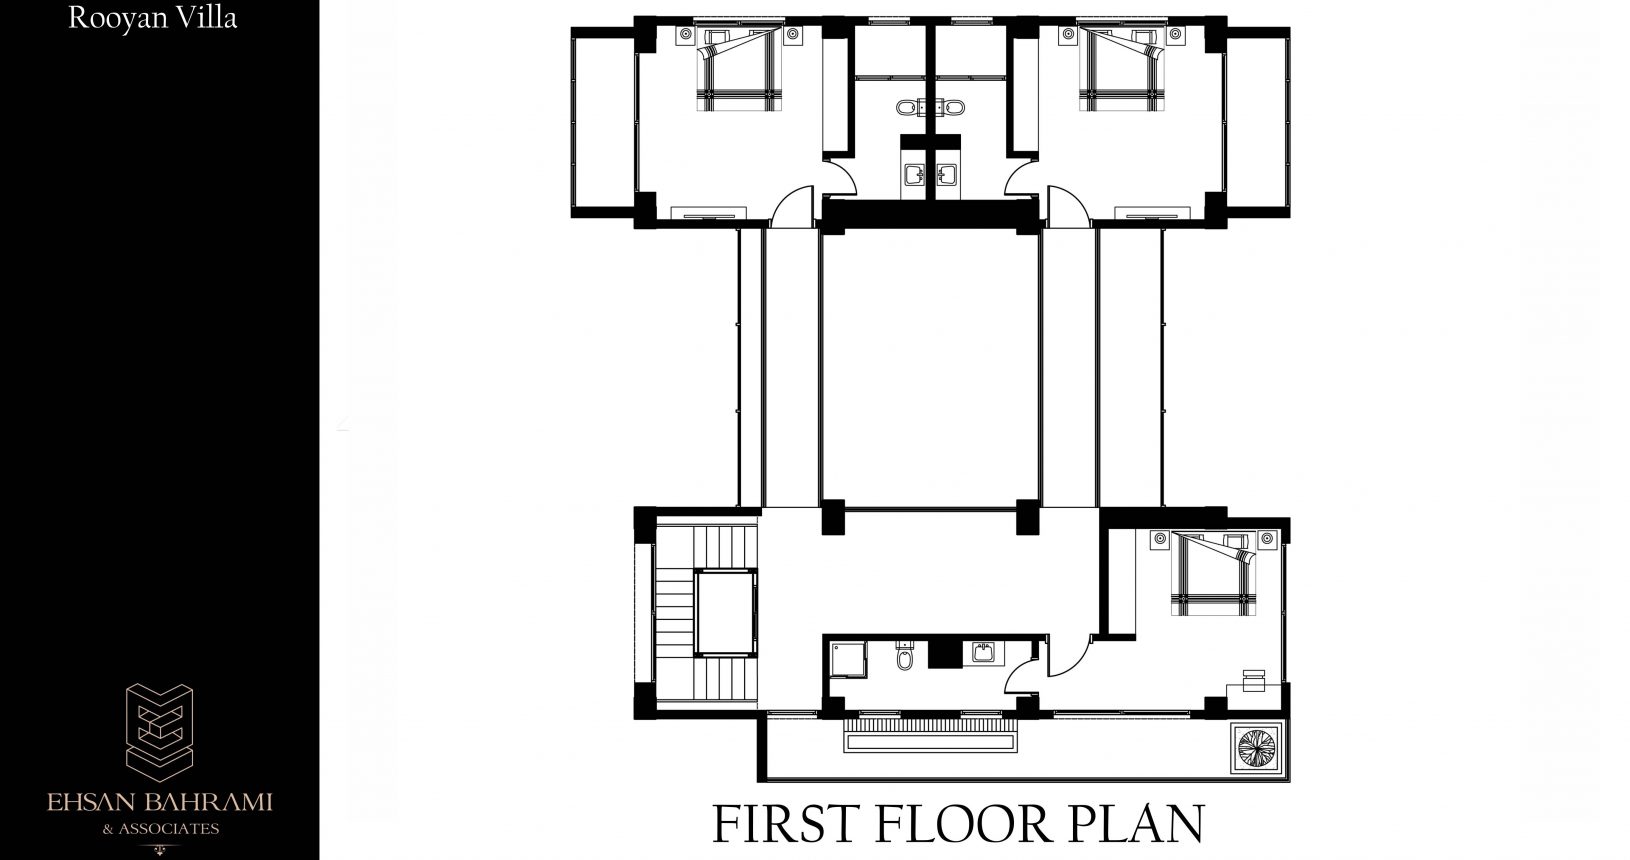 Royan Villa No.9 First Floor Plan1